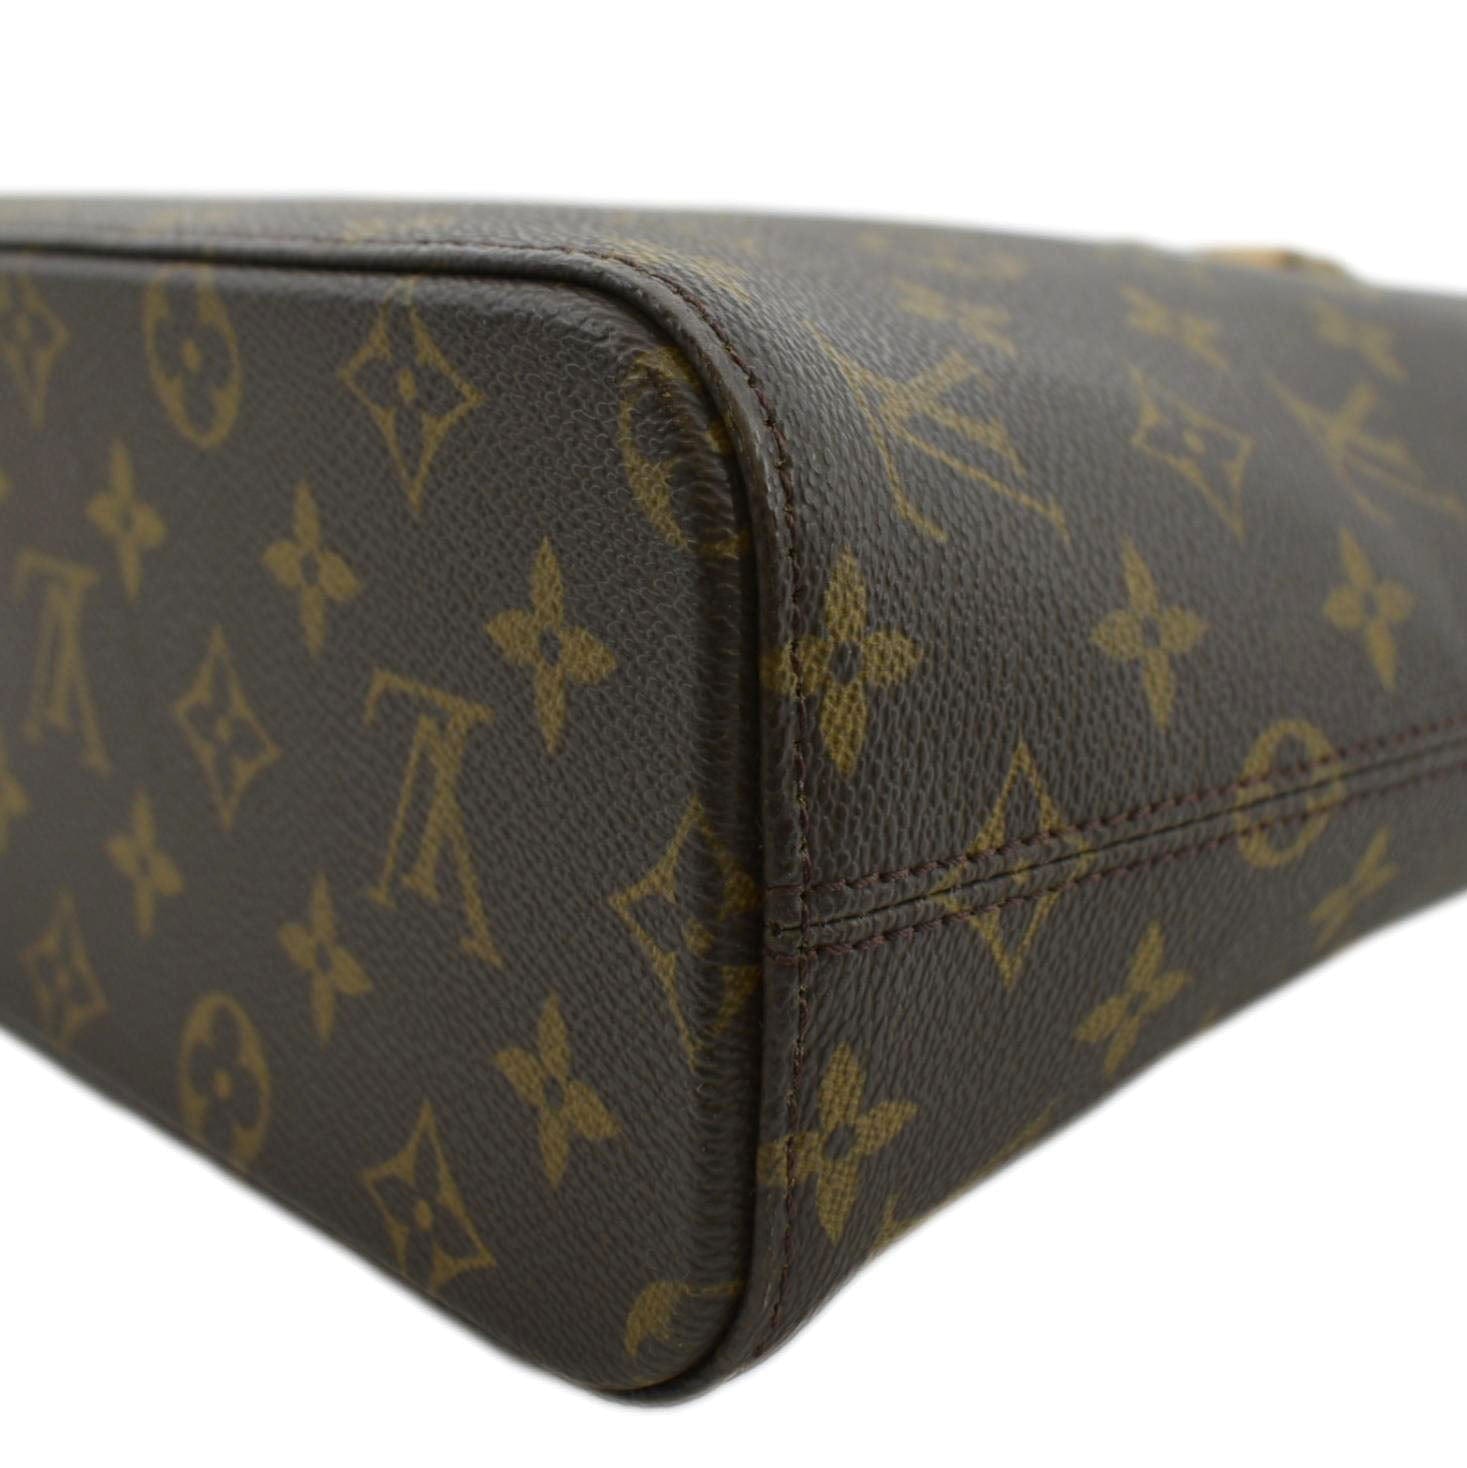 Louis Vuitton Luco Monogram Tote Brown Shoulder Bag Purse Zip